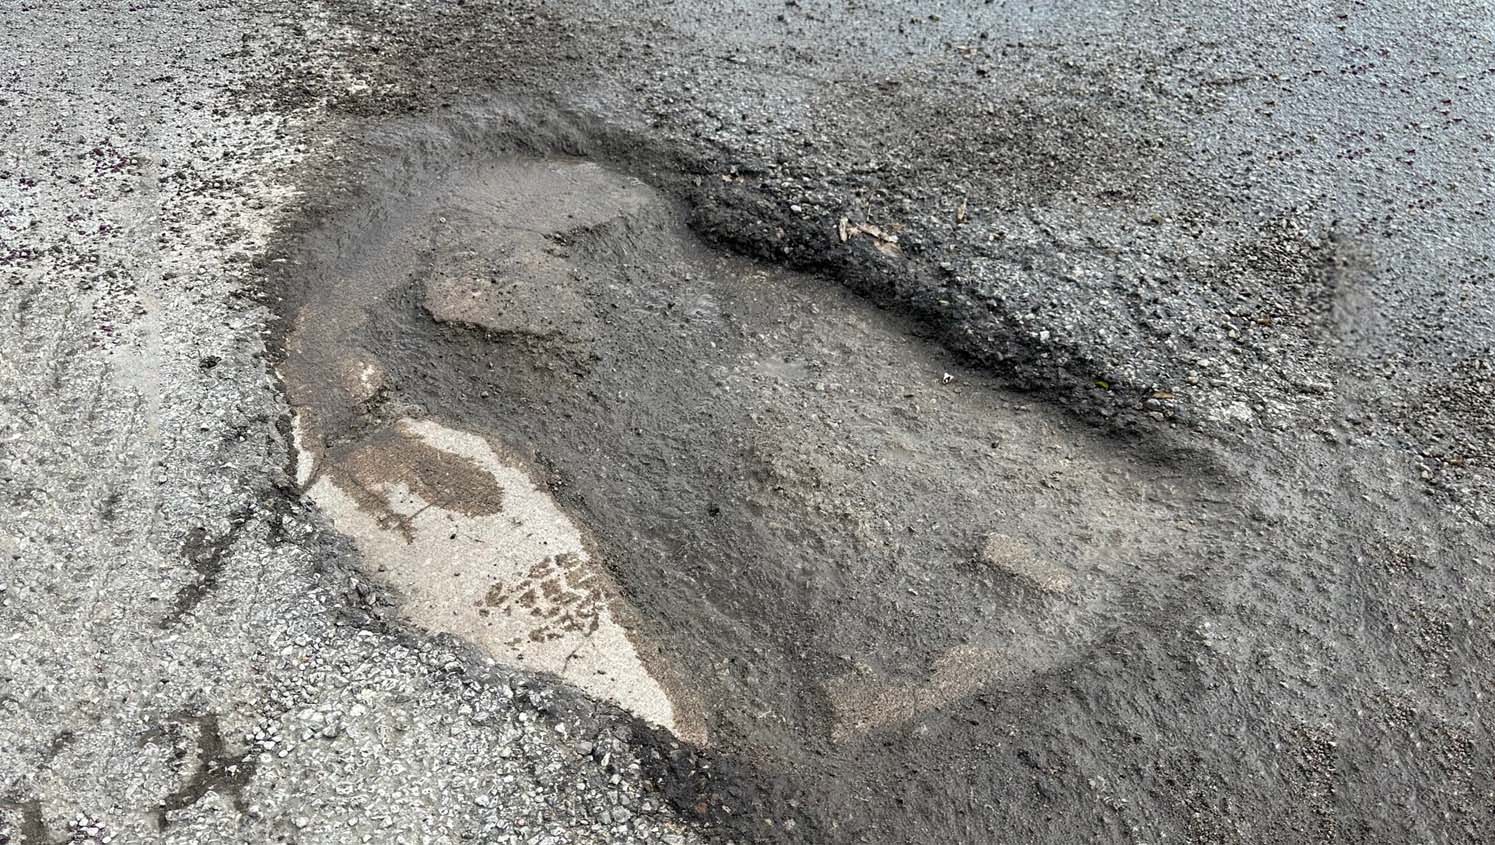 pothole needing repaired